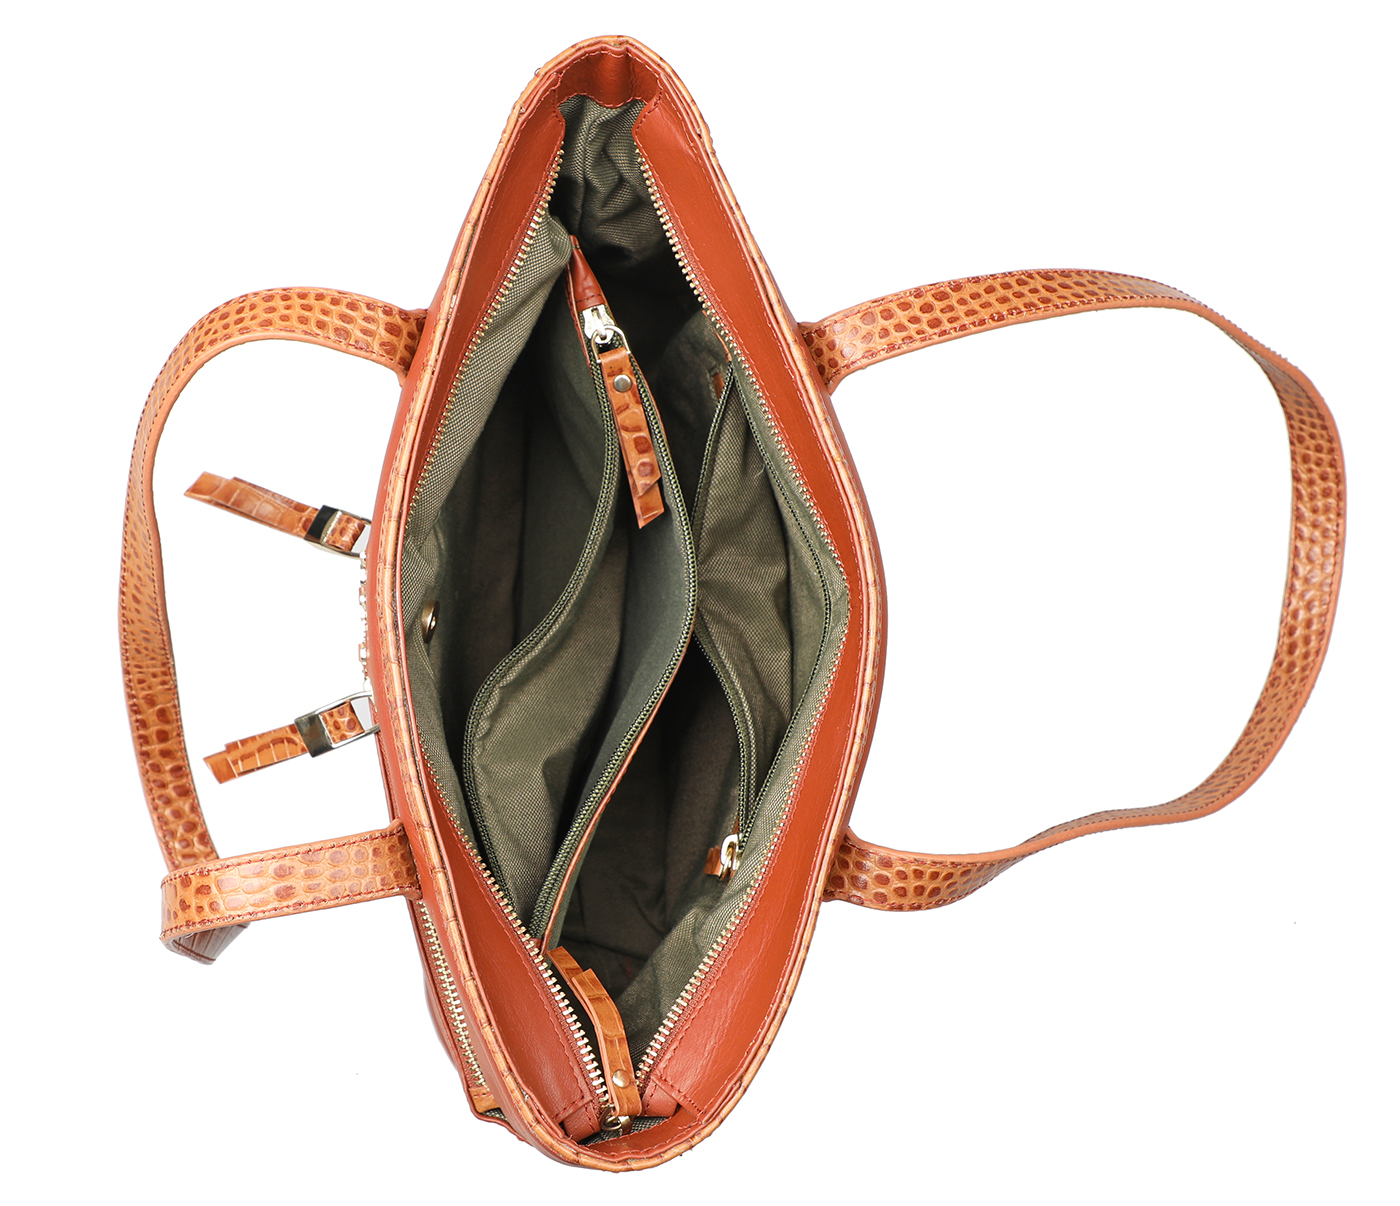 B877-Norita-Shoulder work bag in Genuine Leather - Tan